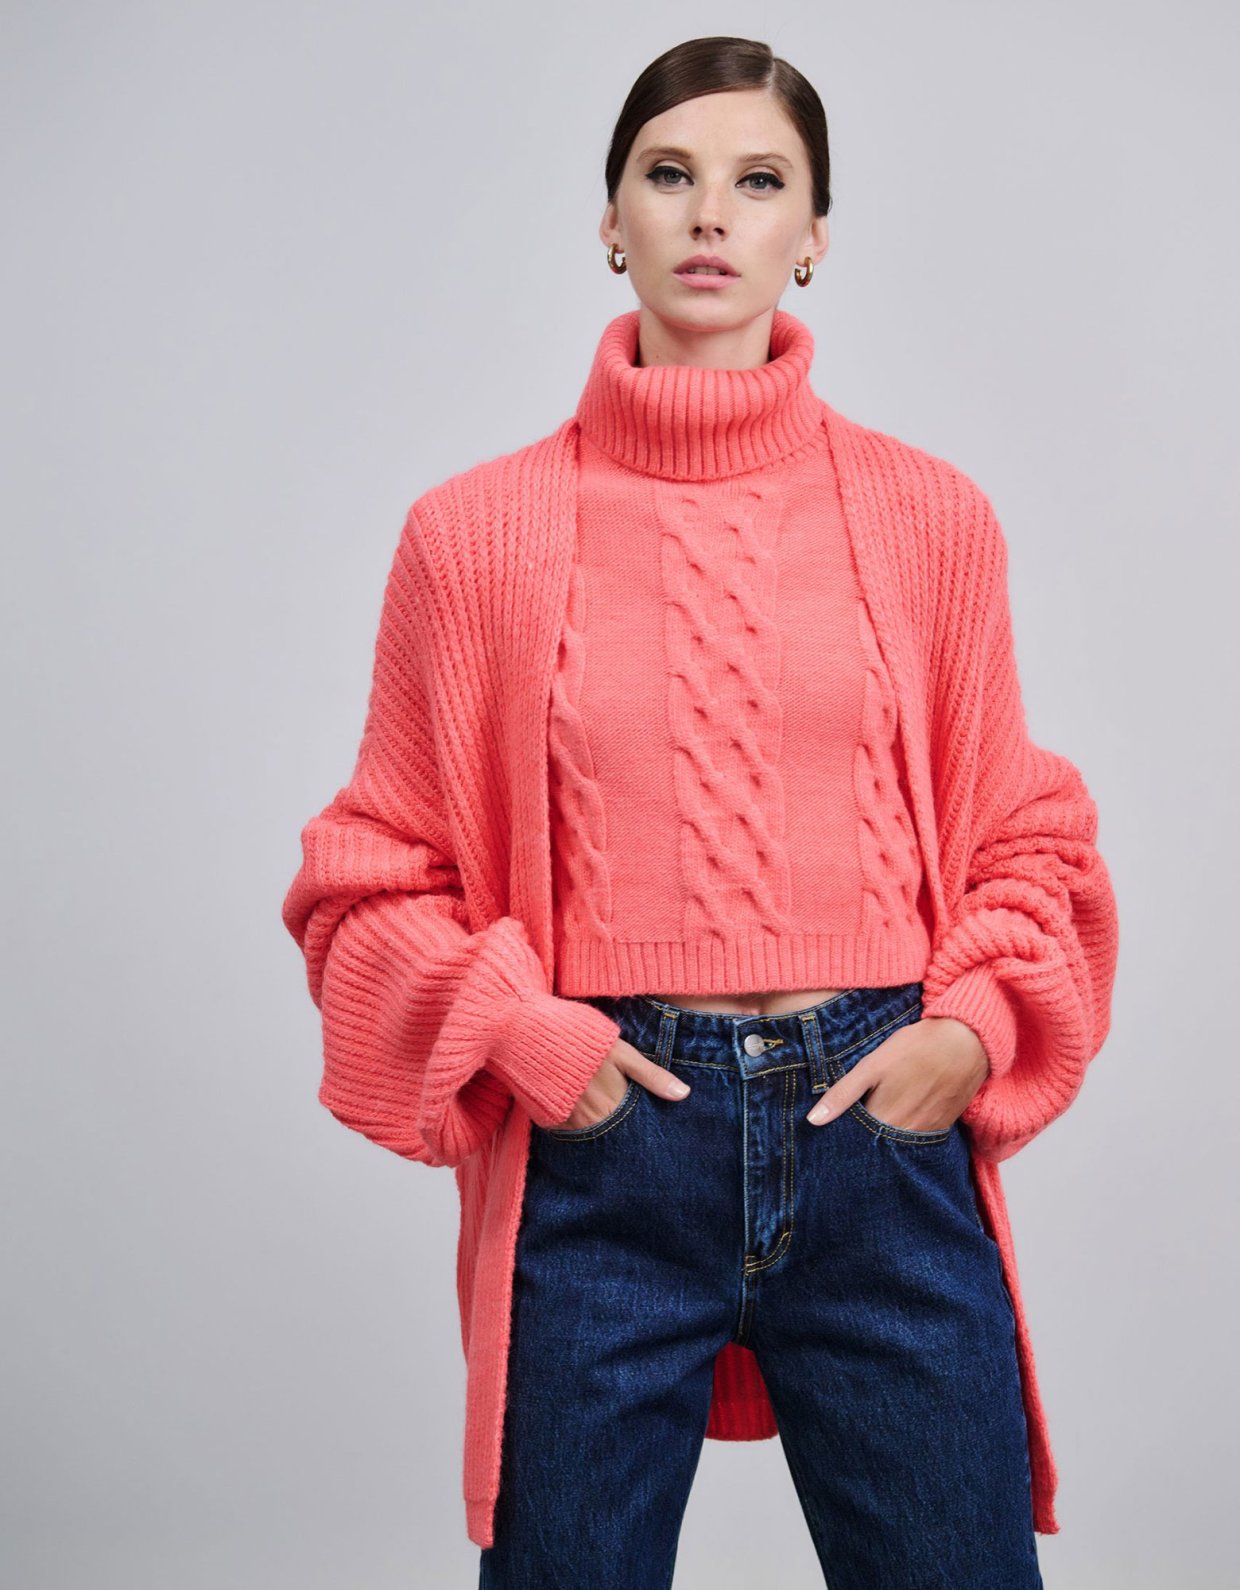 Combos Knitwear Top Turtleneck pink